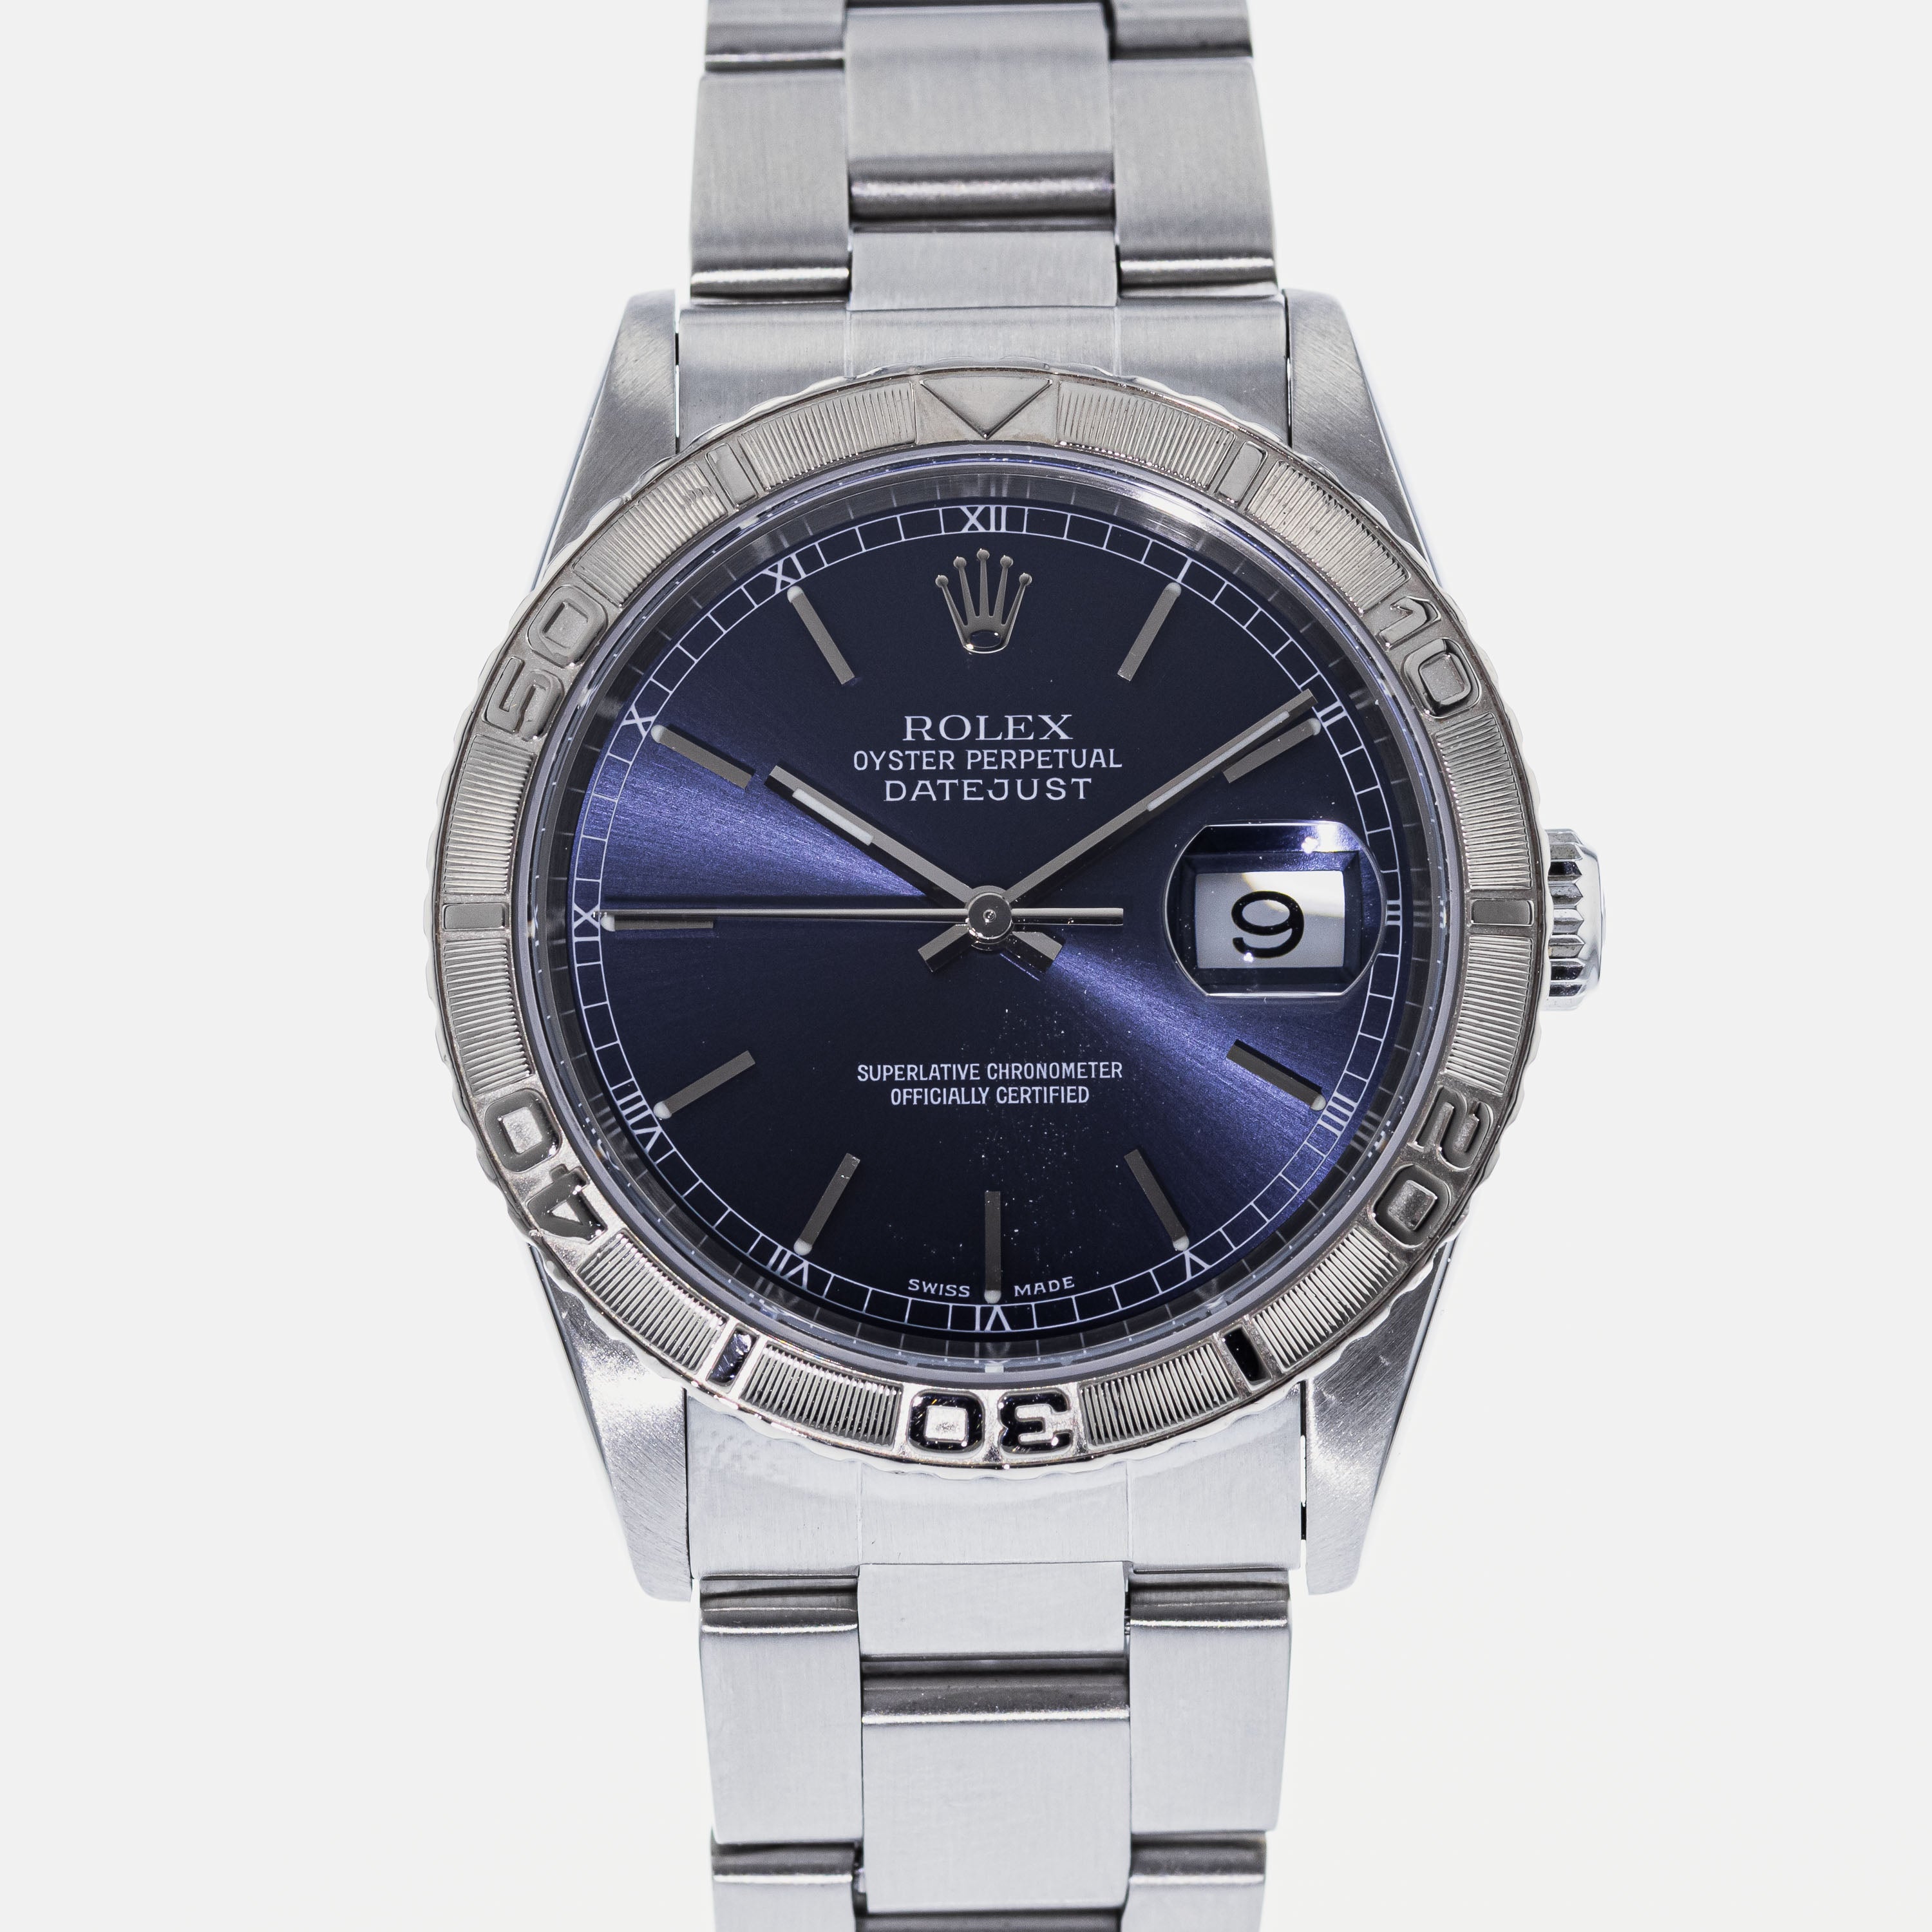 Hårdhed majs vandtæt Authentic Used Rolex Datejust Turn-O-Graph Thunderbird 16264 Watch  (10-10-ROL-69NBVZ)